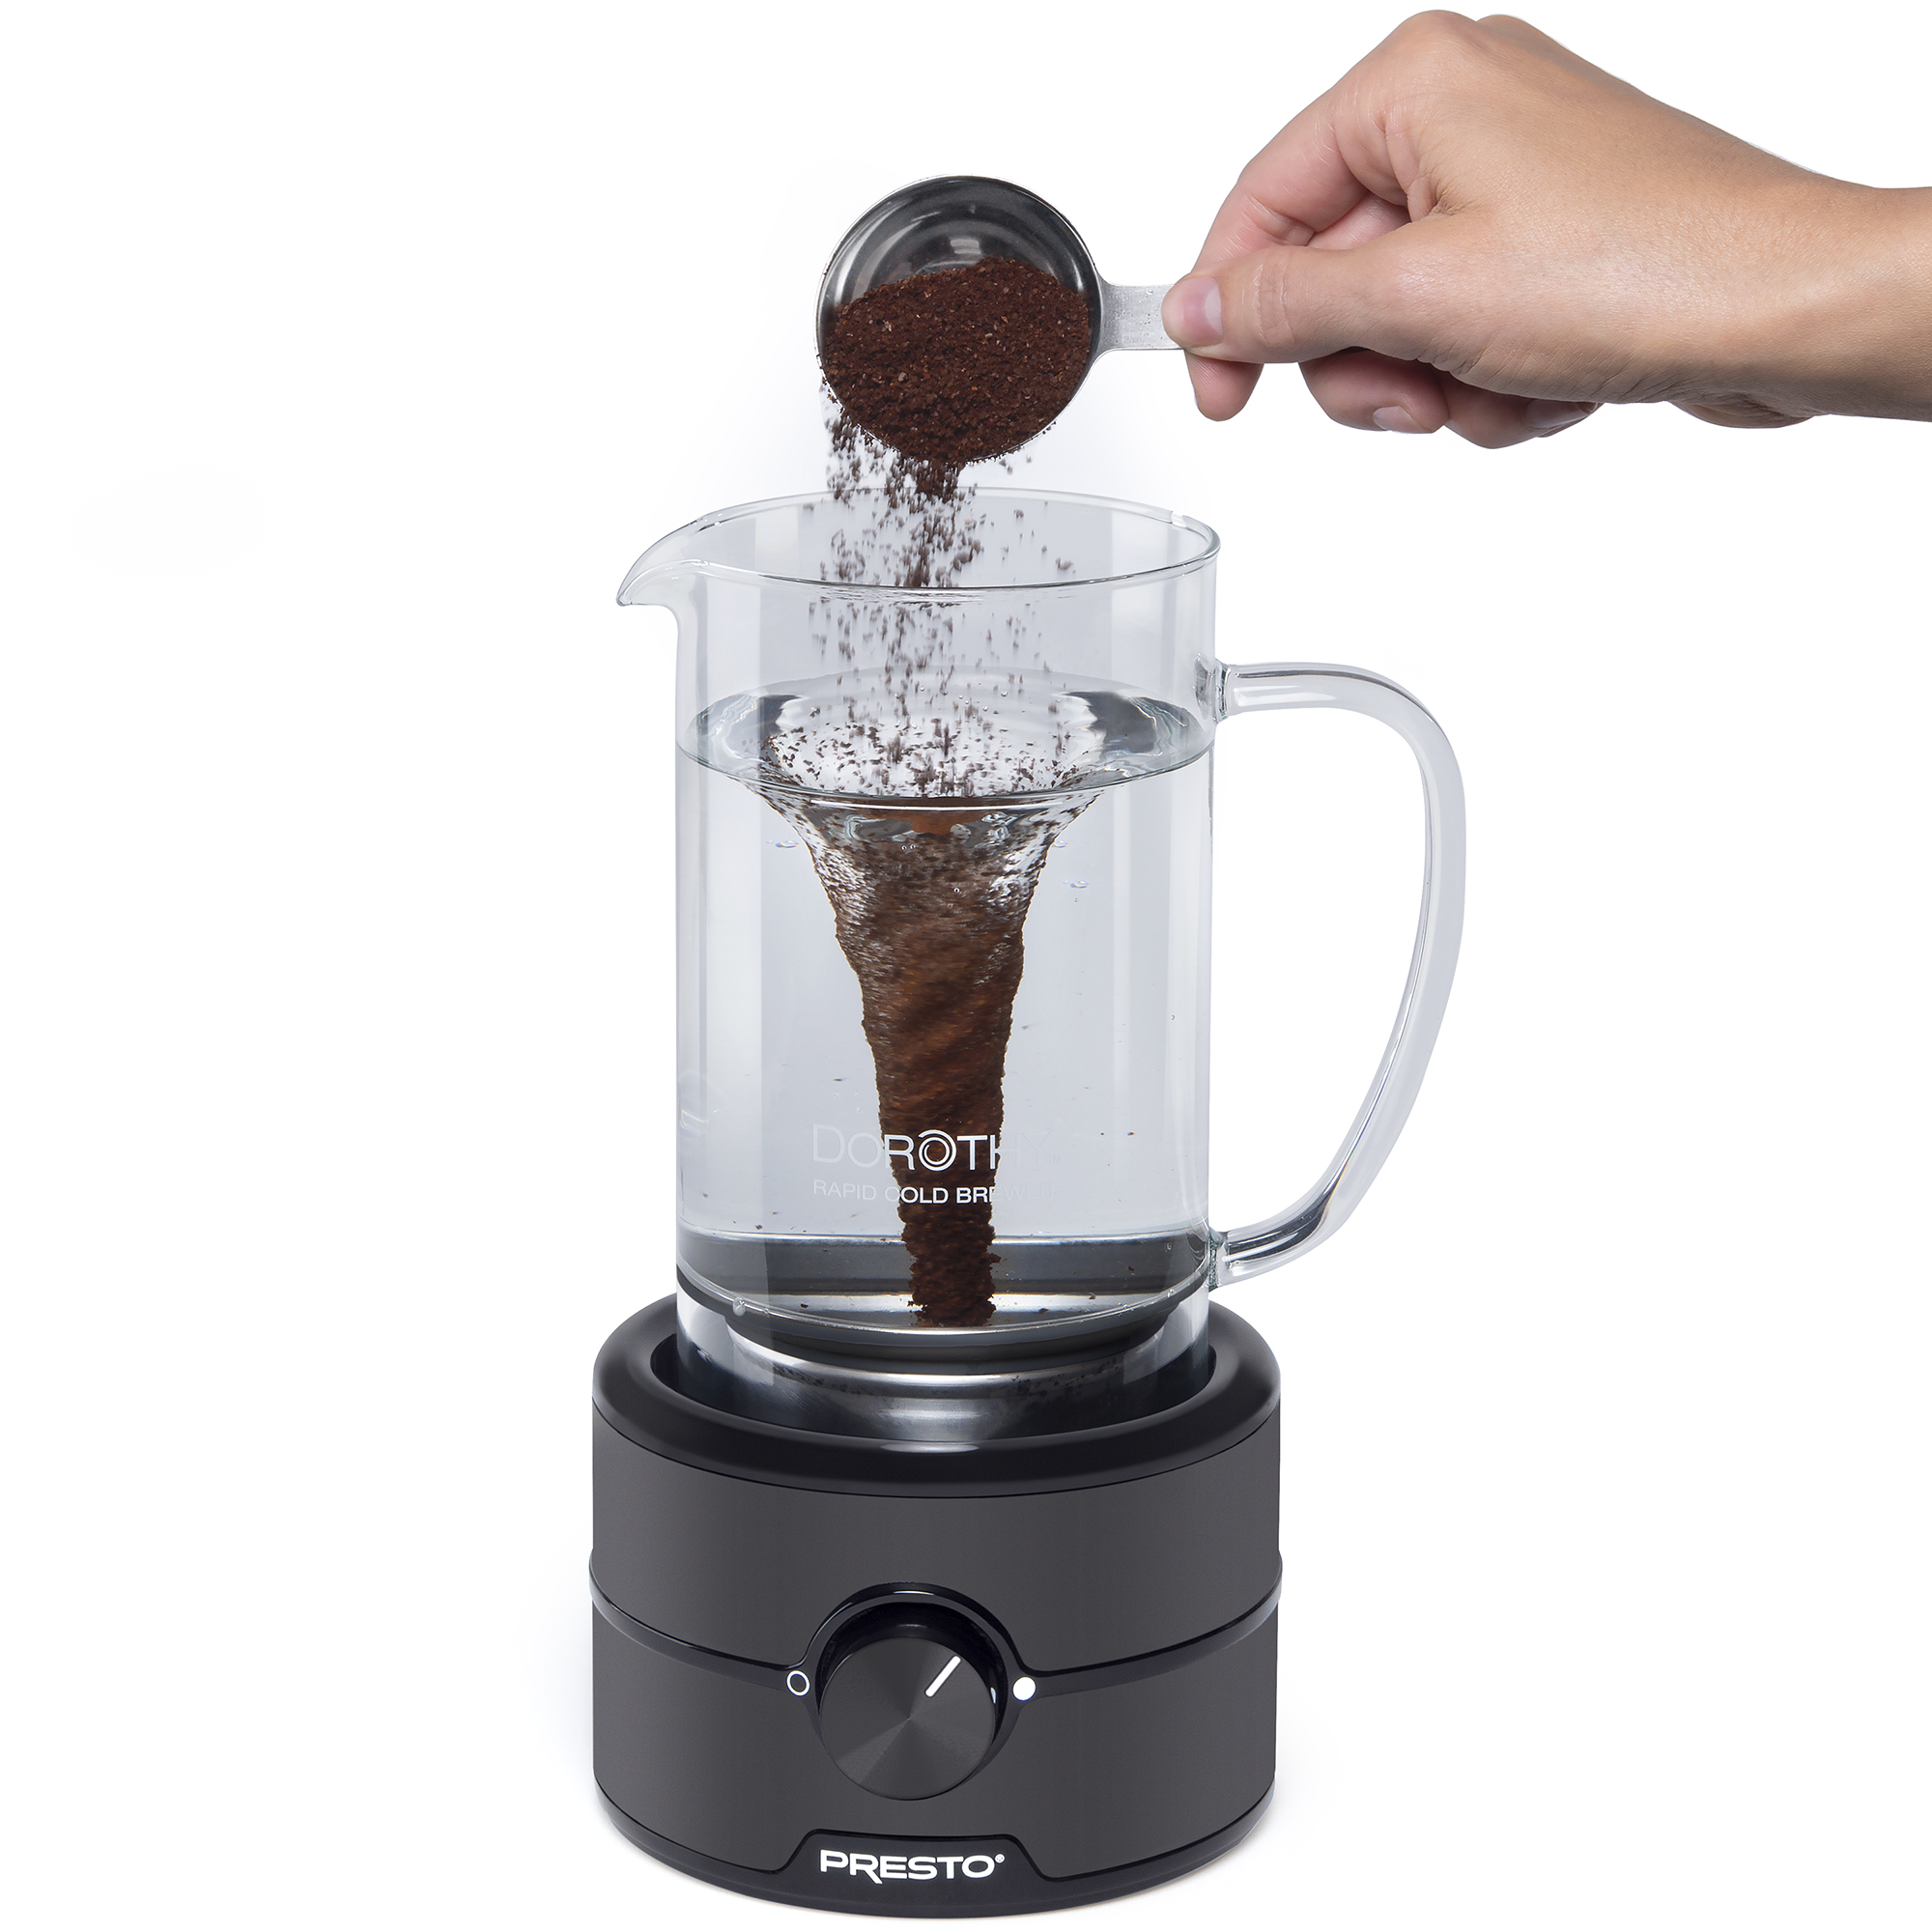 Presto Dorothy™ Rapid Cold Brew Coffee Maker - 02937 - image 5 of 8